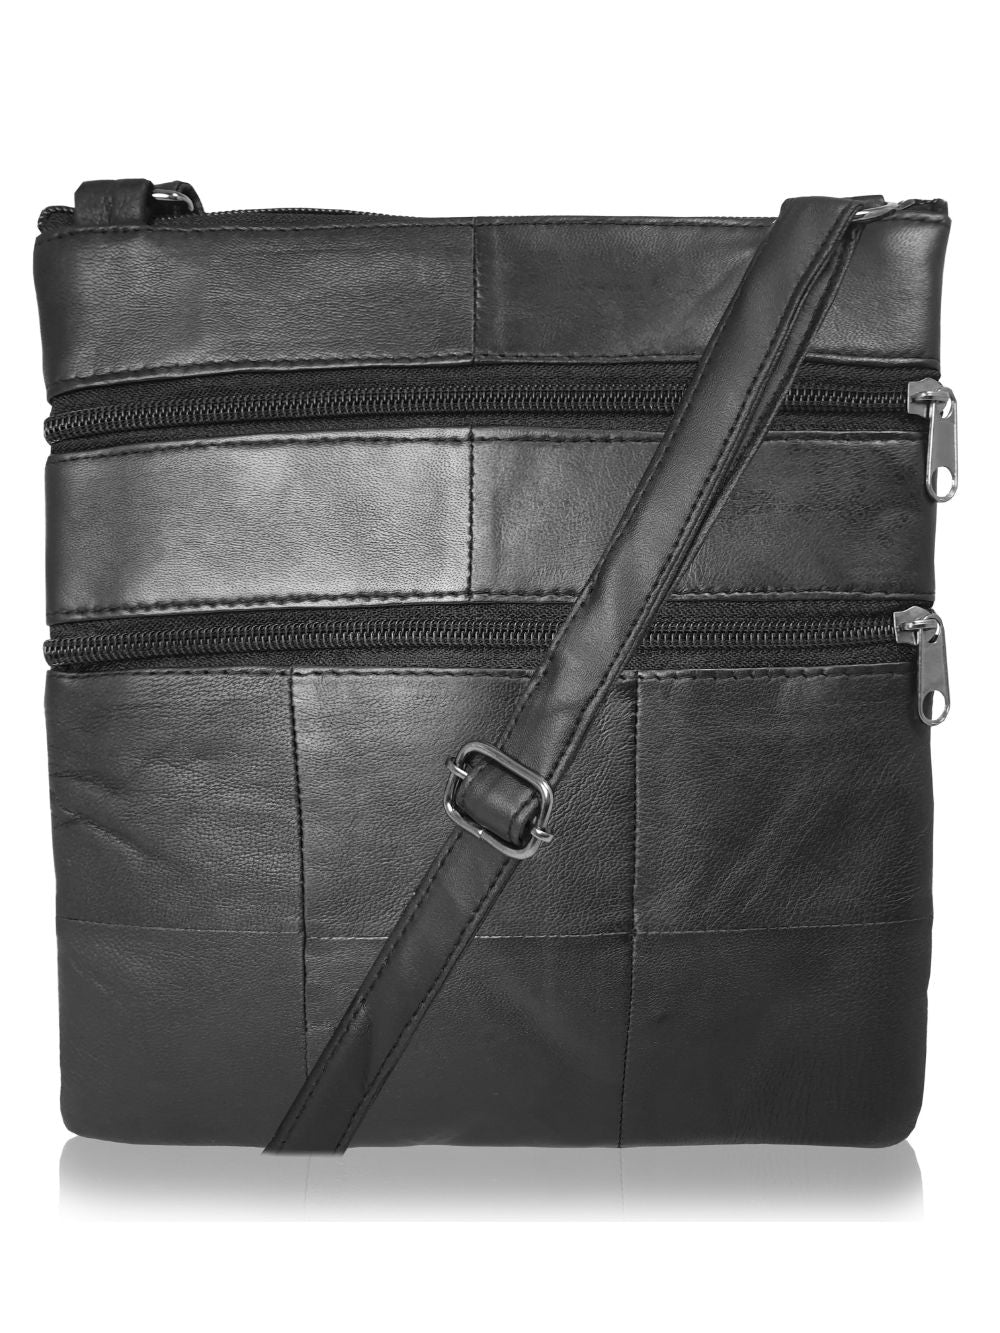 Roamlite Mens Travel pouch black leather RL178 Front